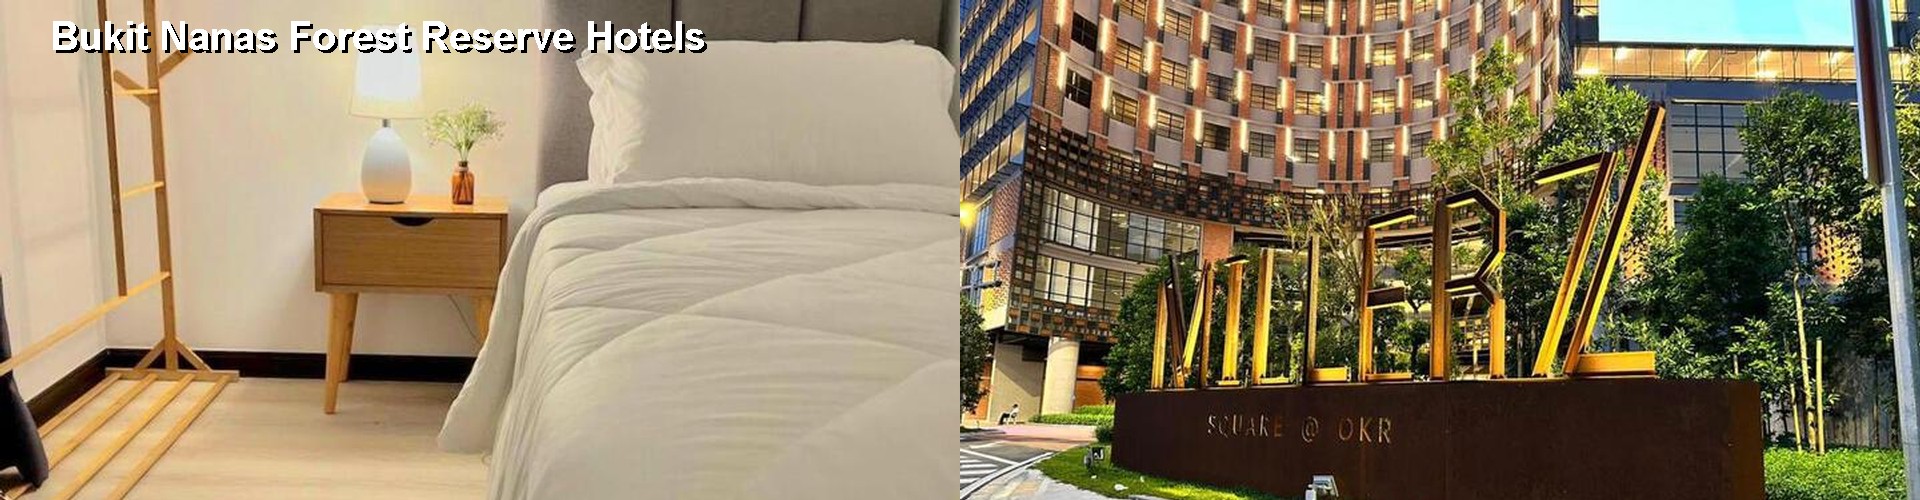 3 Best Hotels near Bukit Nanas Forest Reserve